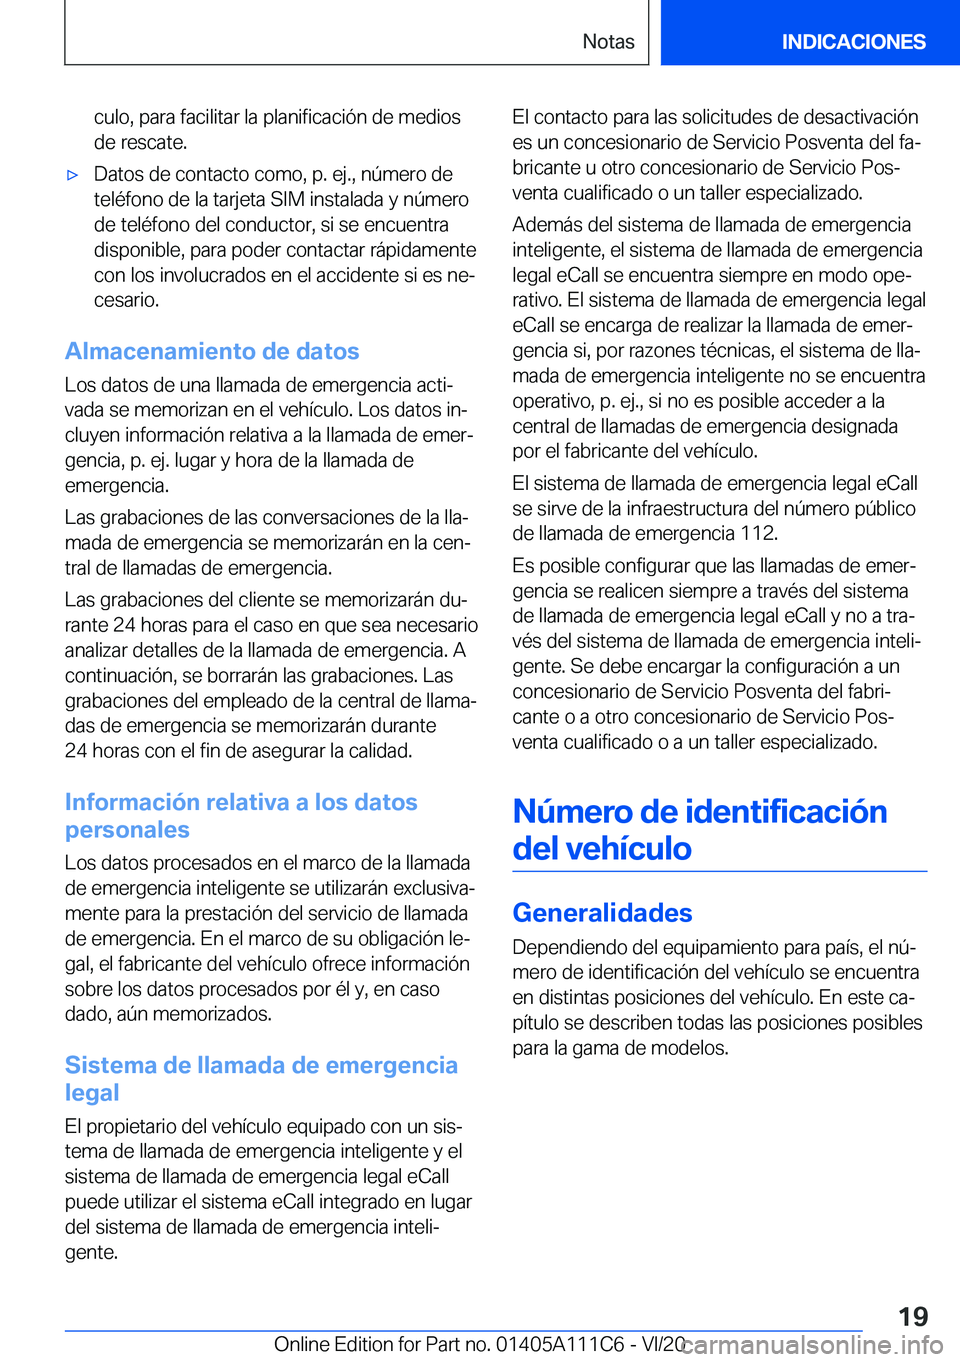 BMW 3 SERIES SEDAN PLUG-IN HYBRID 2021  Manuales de Empleo (in Spanish) �c�u�l�o�,��p�a�r�a��f�a�c�i�l�i�t�a�r��l�a��p�l�a�n�i�f�i�c�a�c�i�